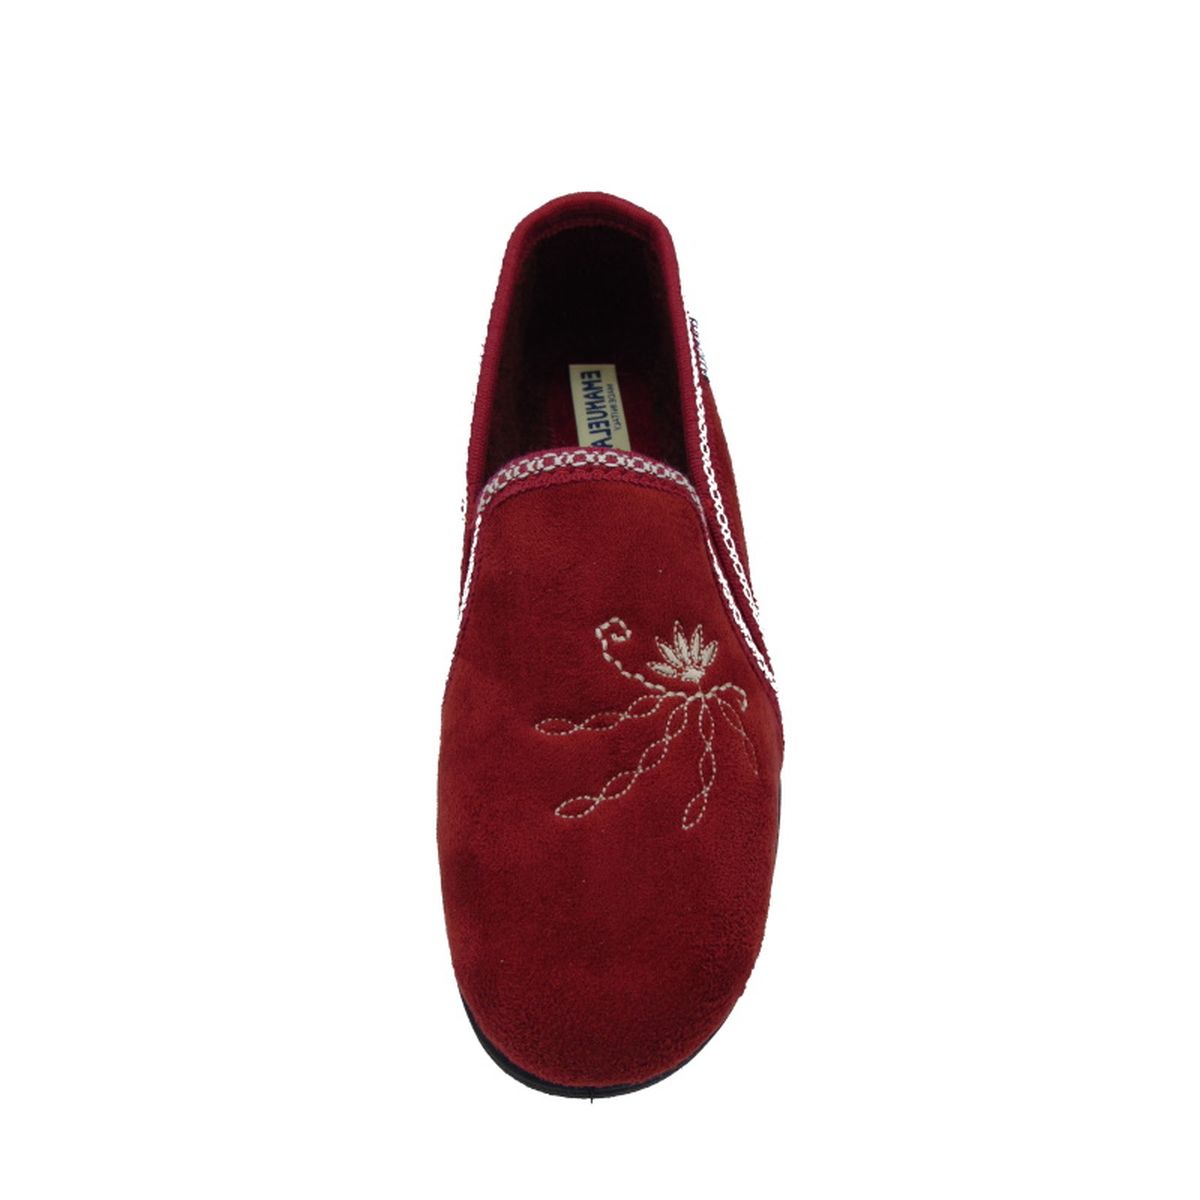 Pantofola Donna con elastici laterali Emanuela 855 Bordeauximg_3